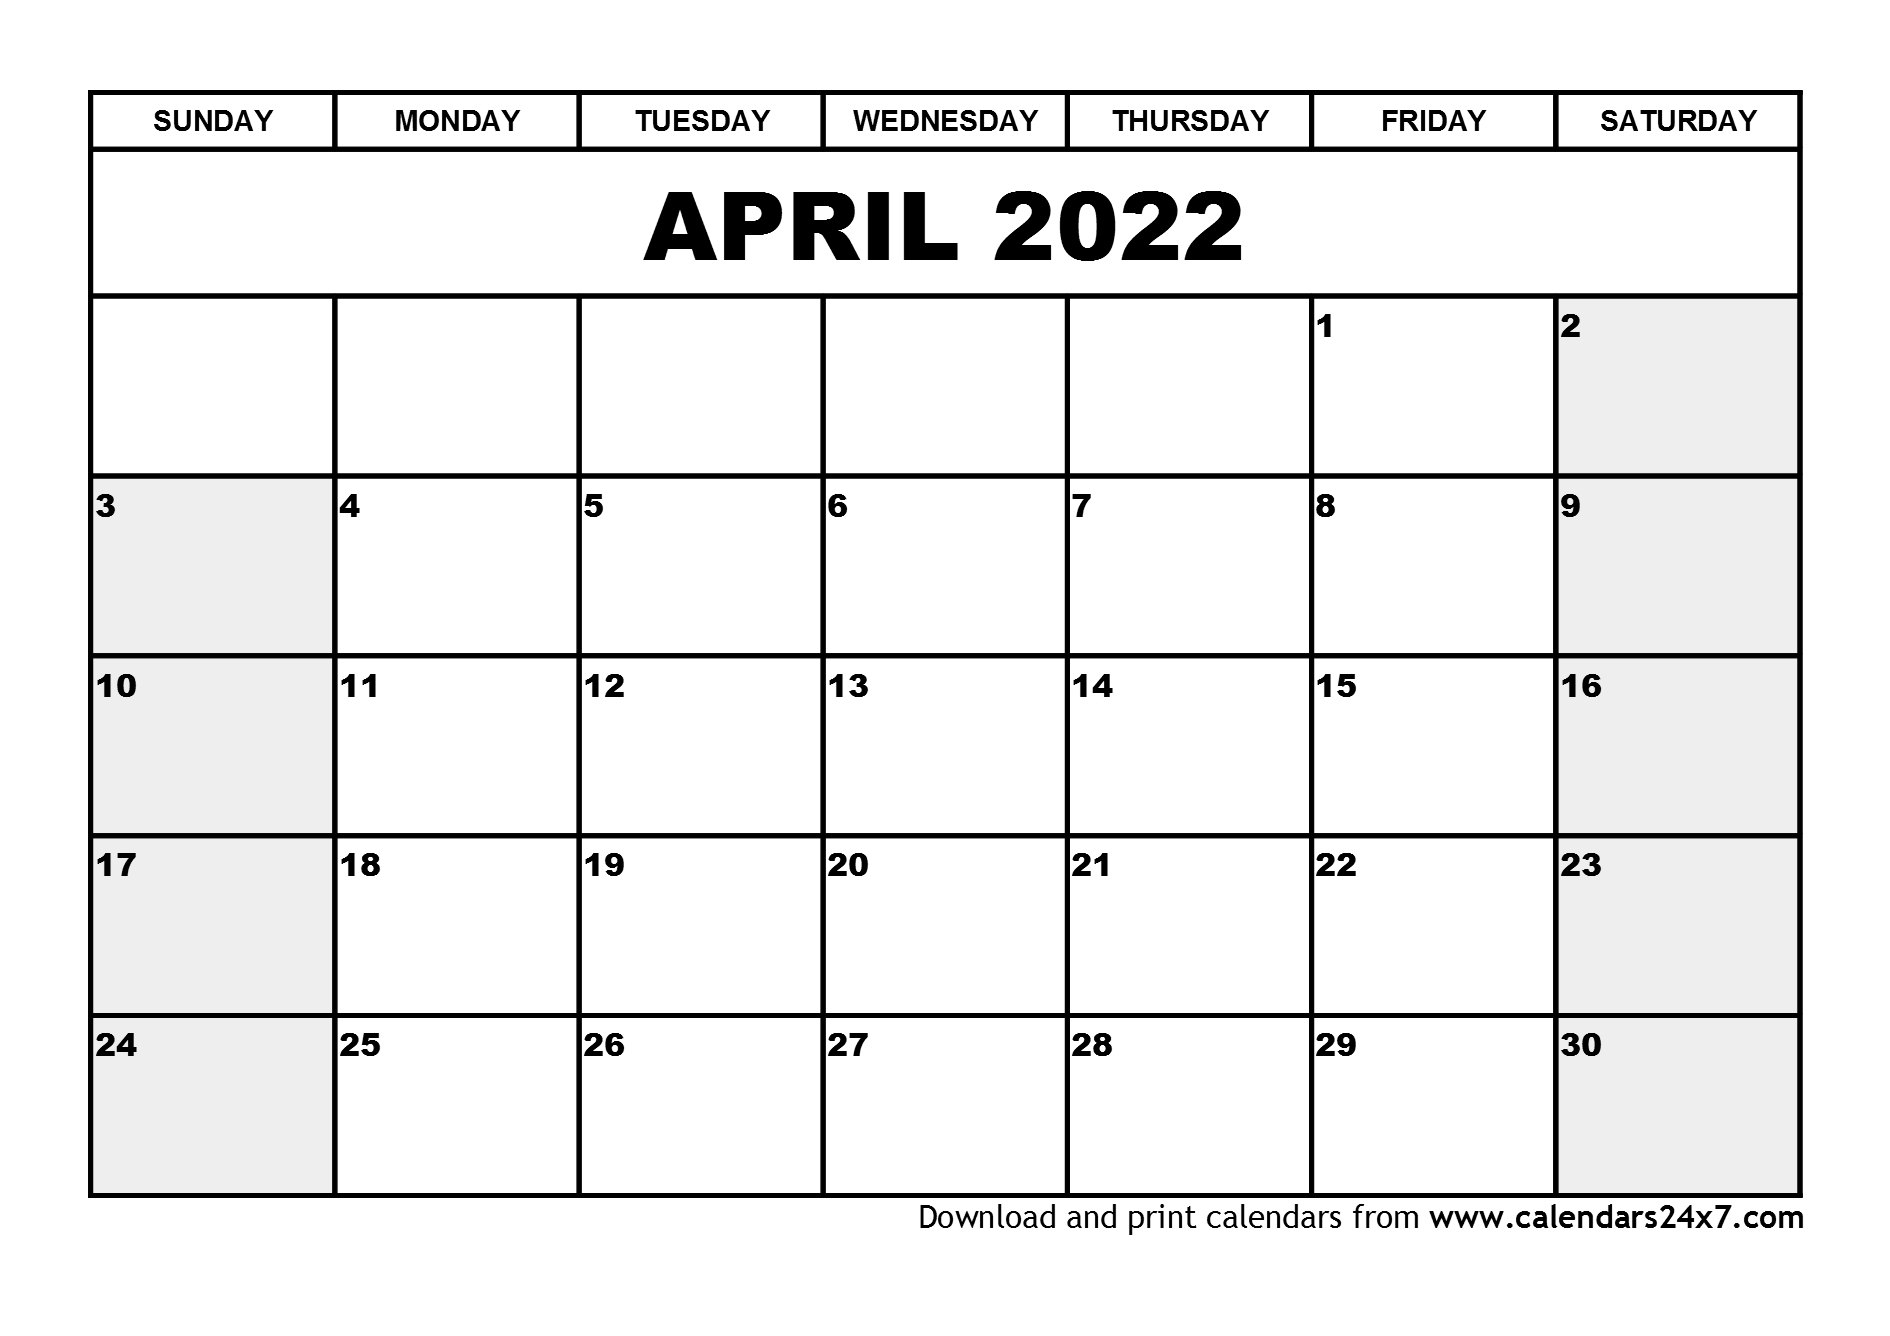 Calendar April 2022 Races